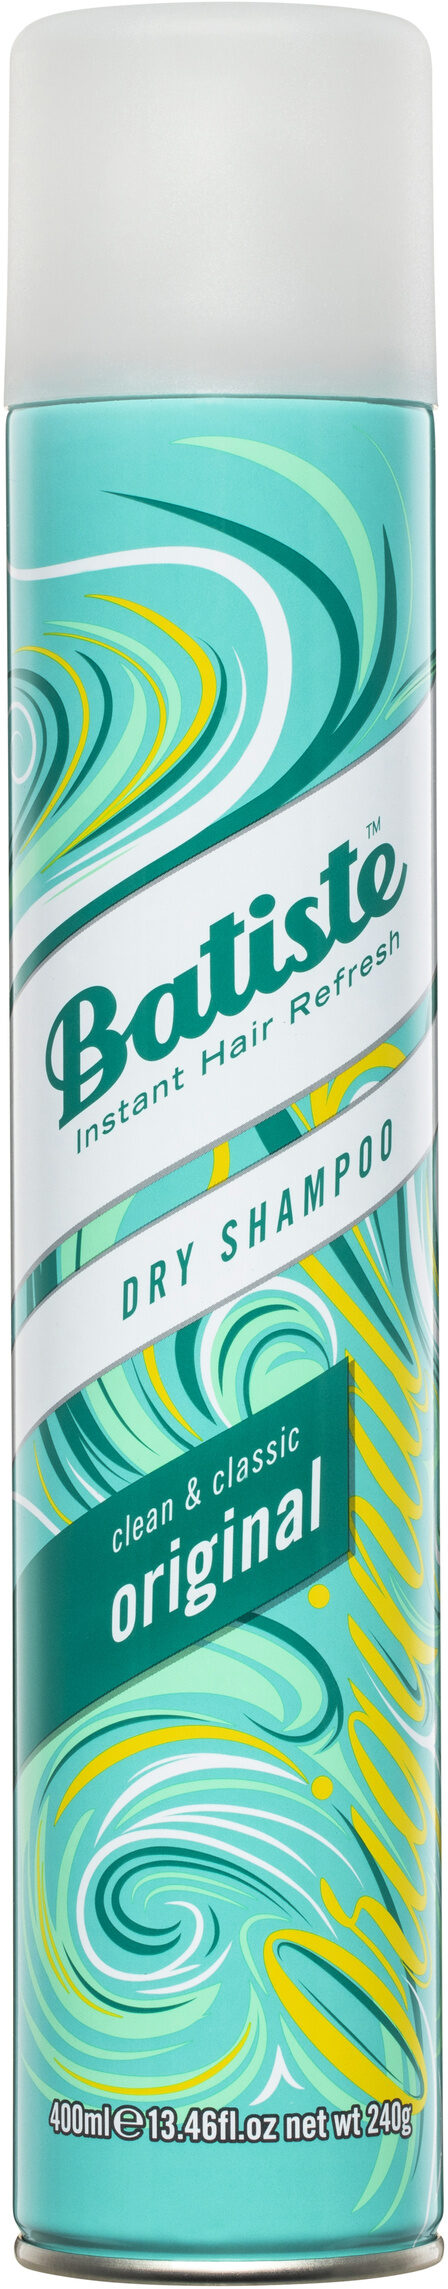 Dry Shampoo - Produkt - en